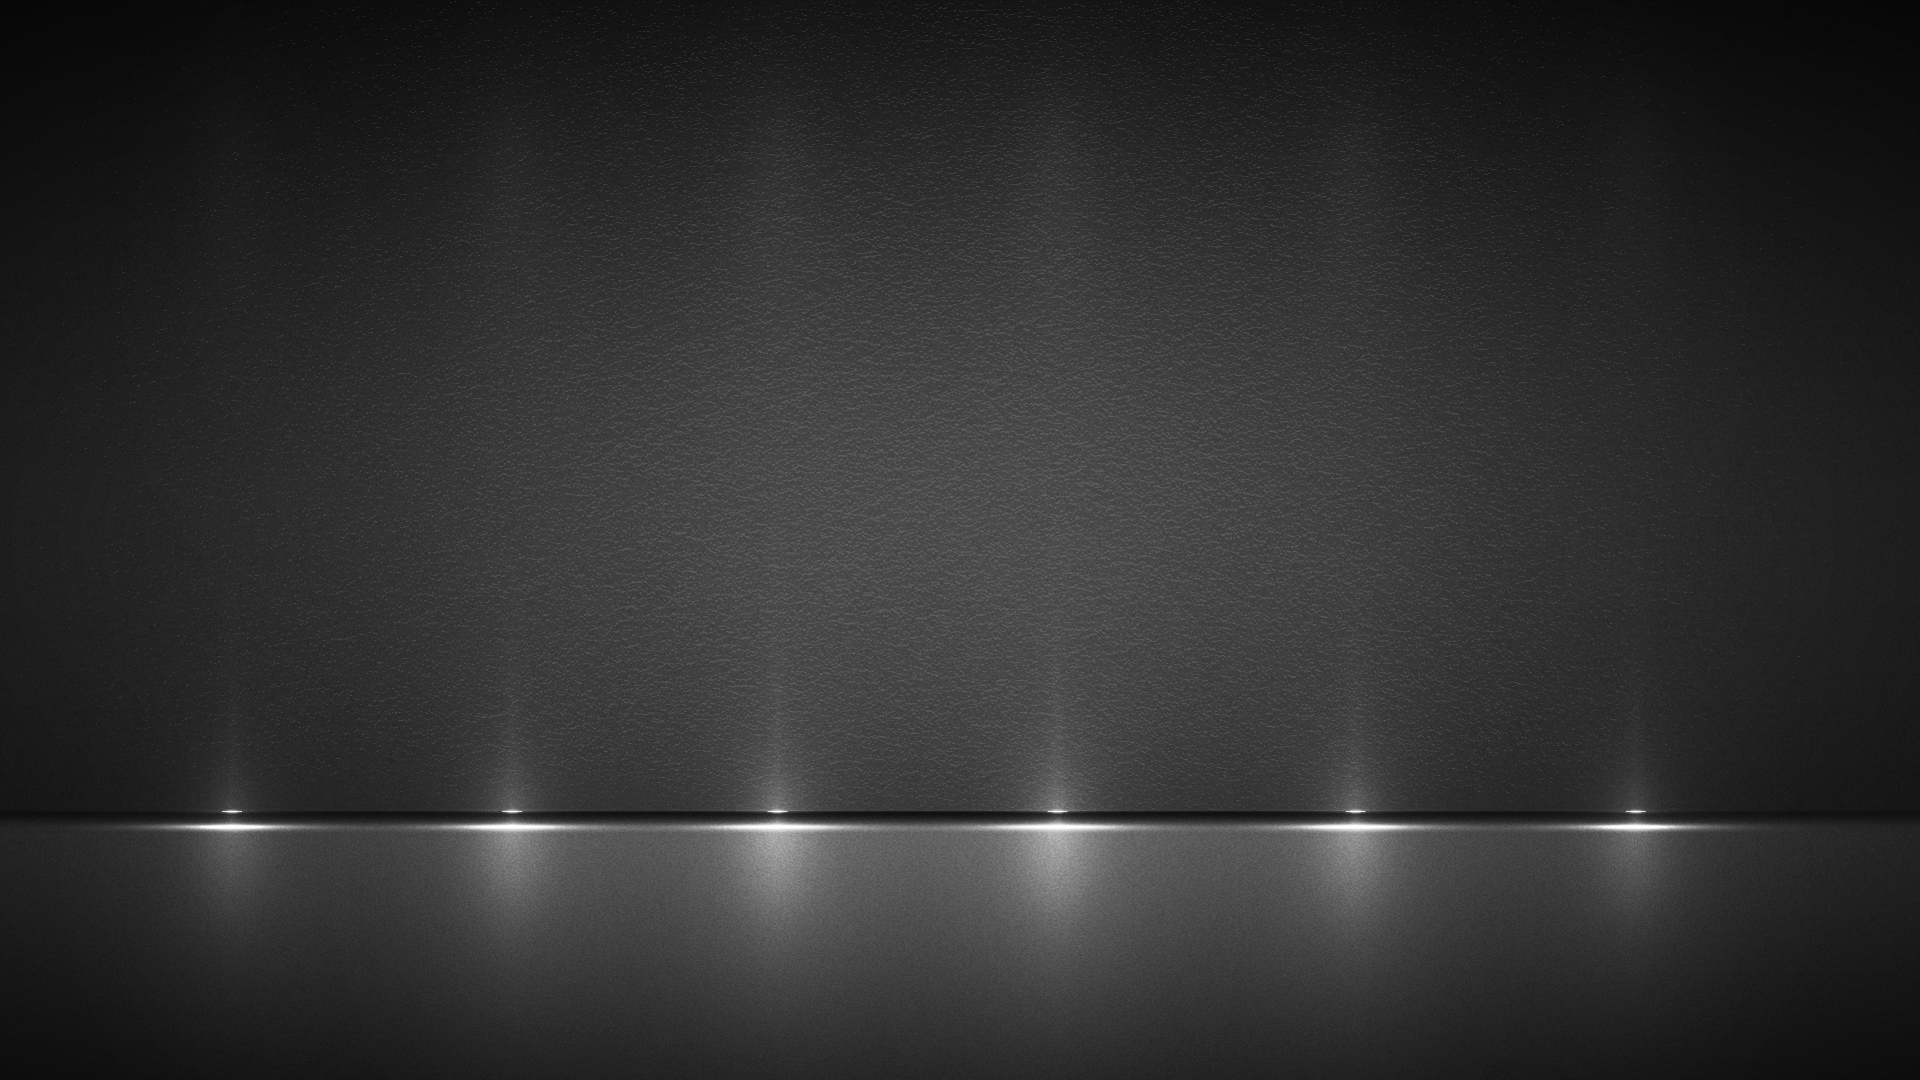  grey illumination background presentations powerpoint backgroundsjpg 1920x1080